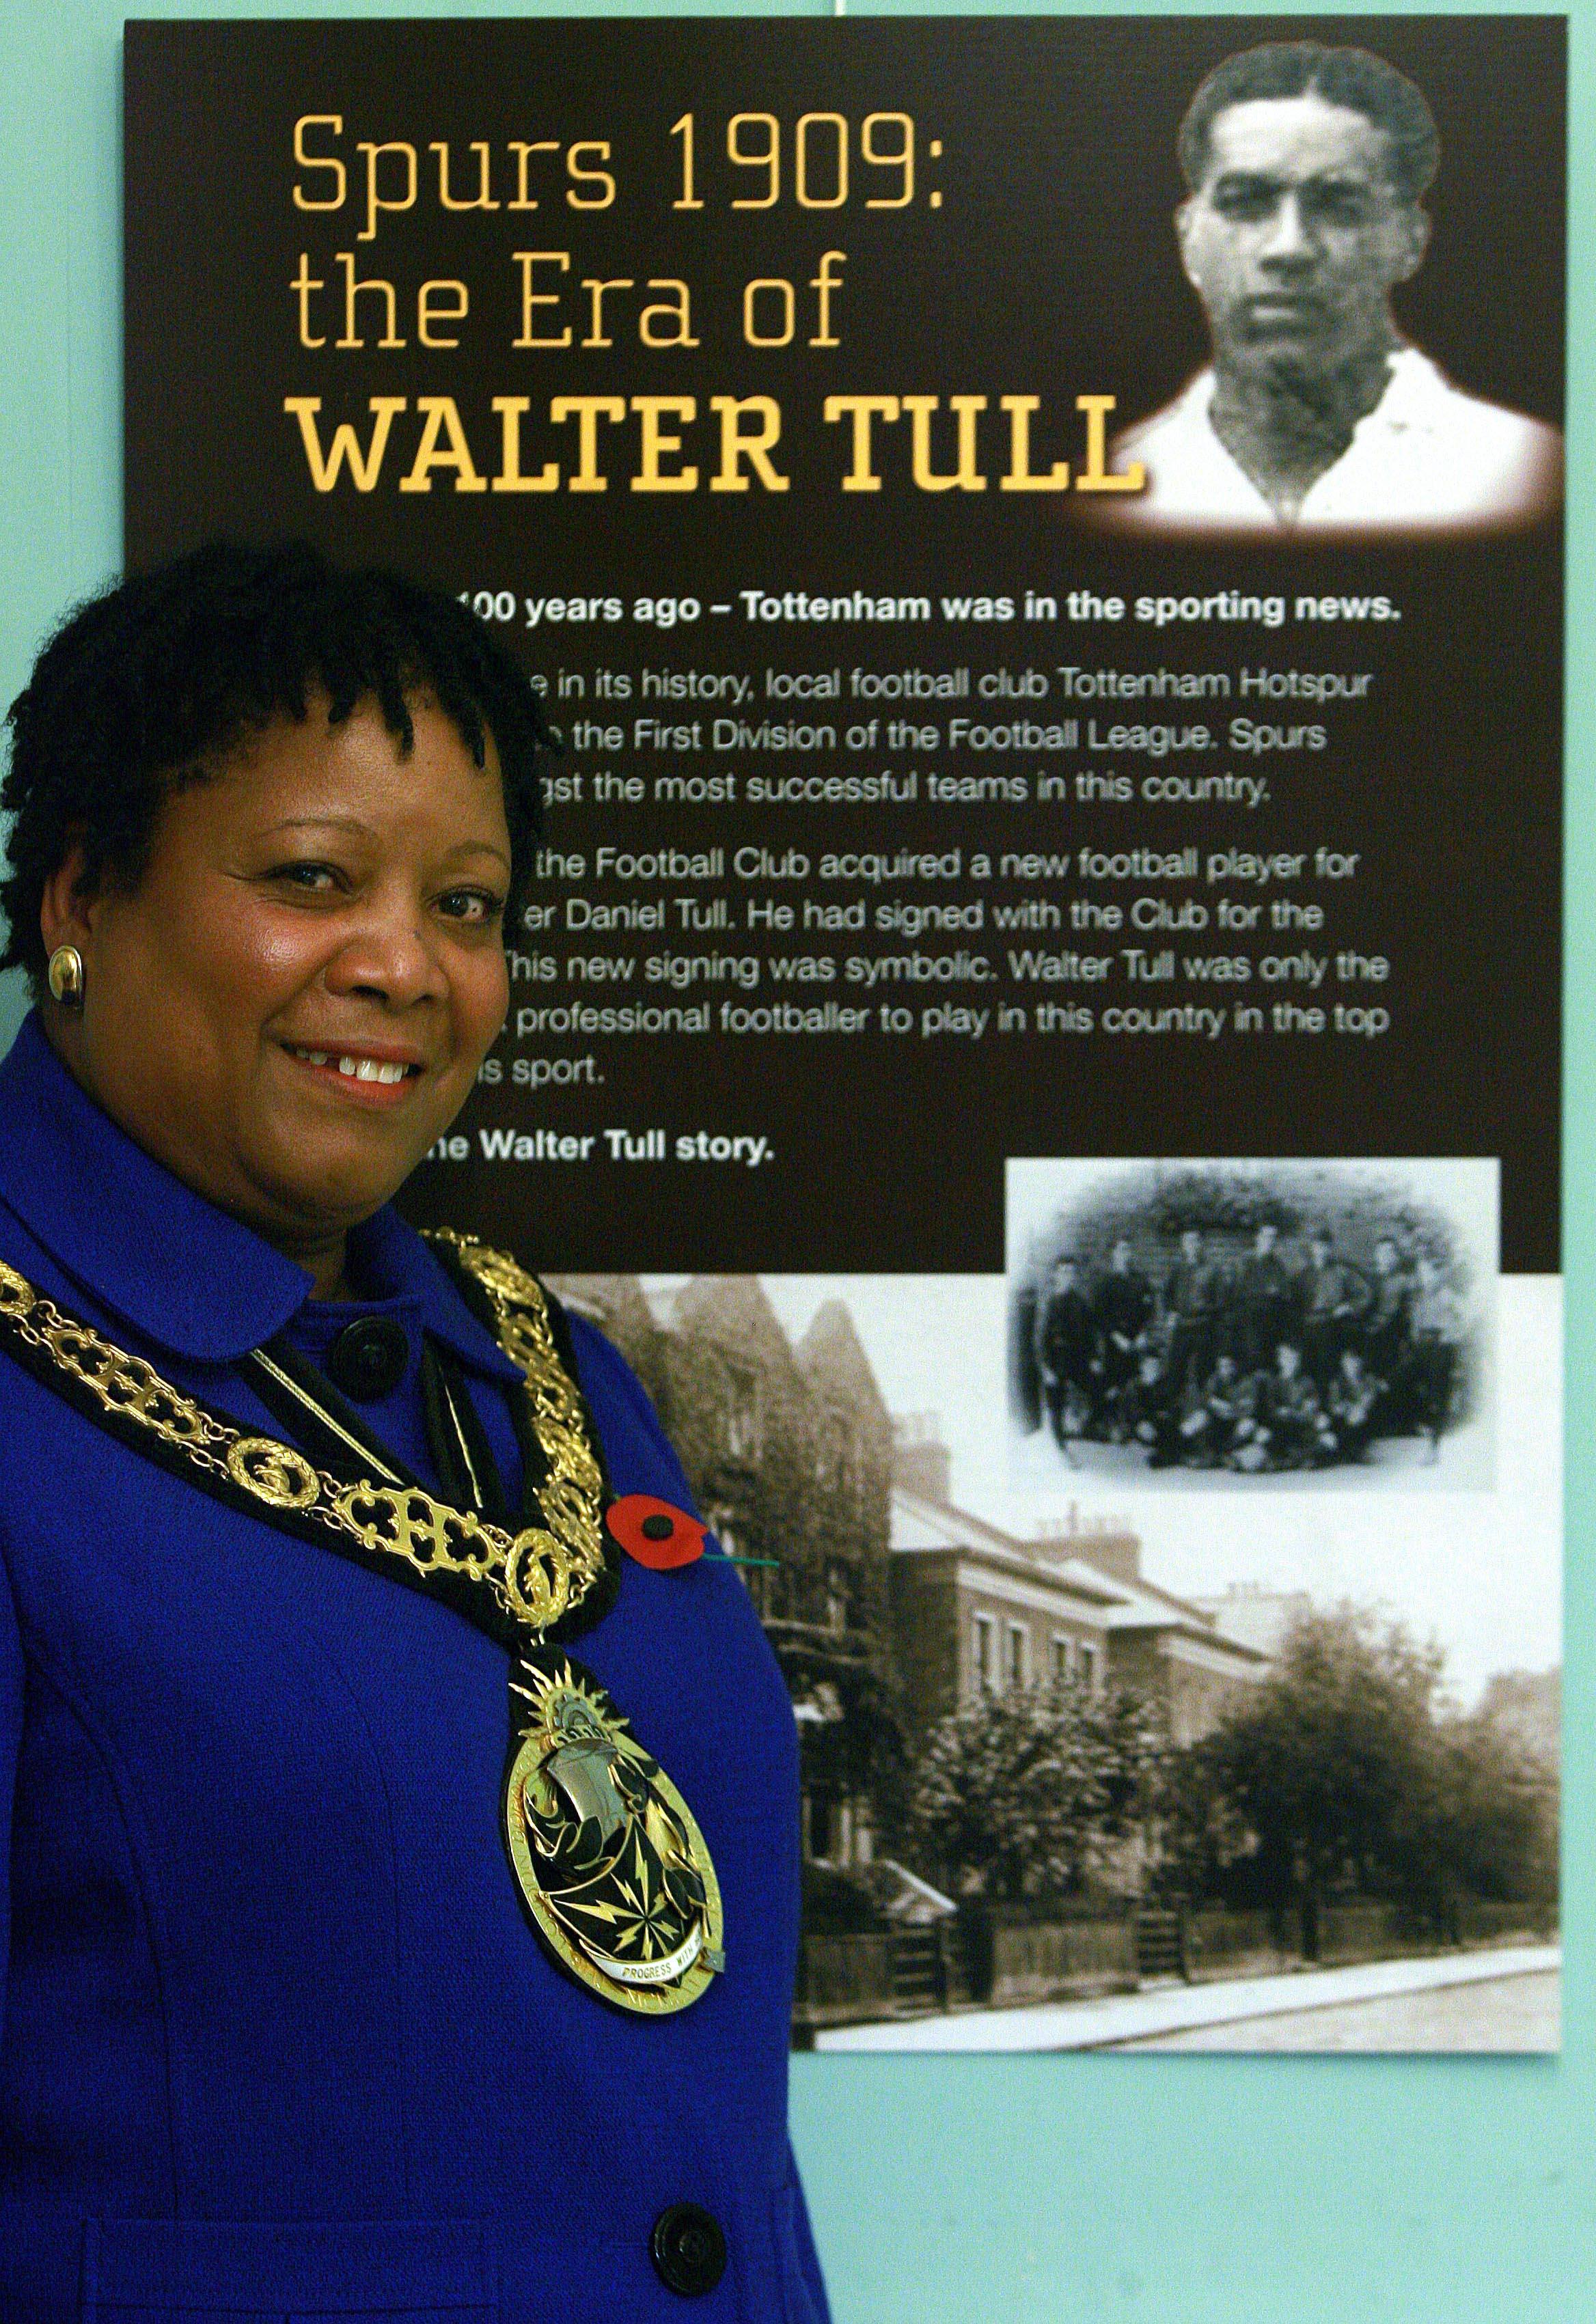 Mayor of Haringey Cllr Bernice Vanier unveils exhibition to Walter Tull in 2009